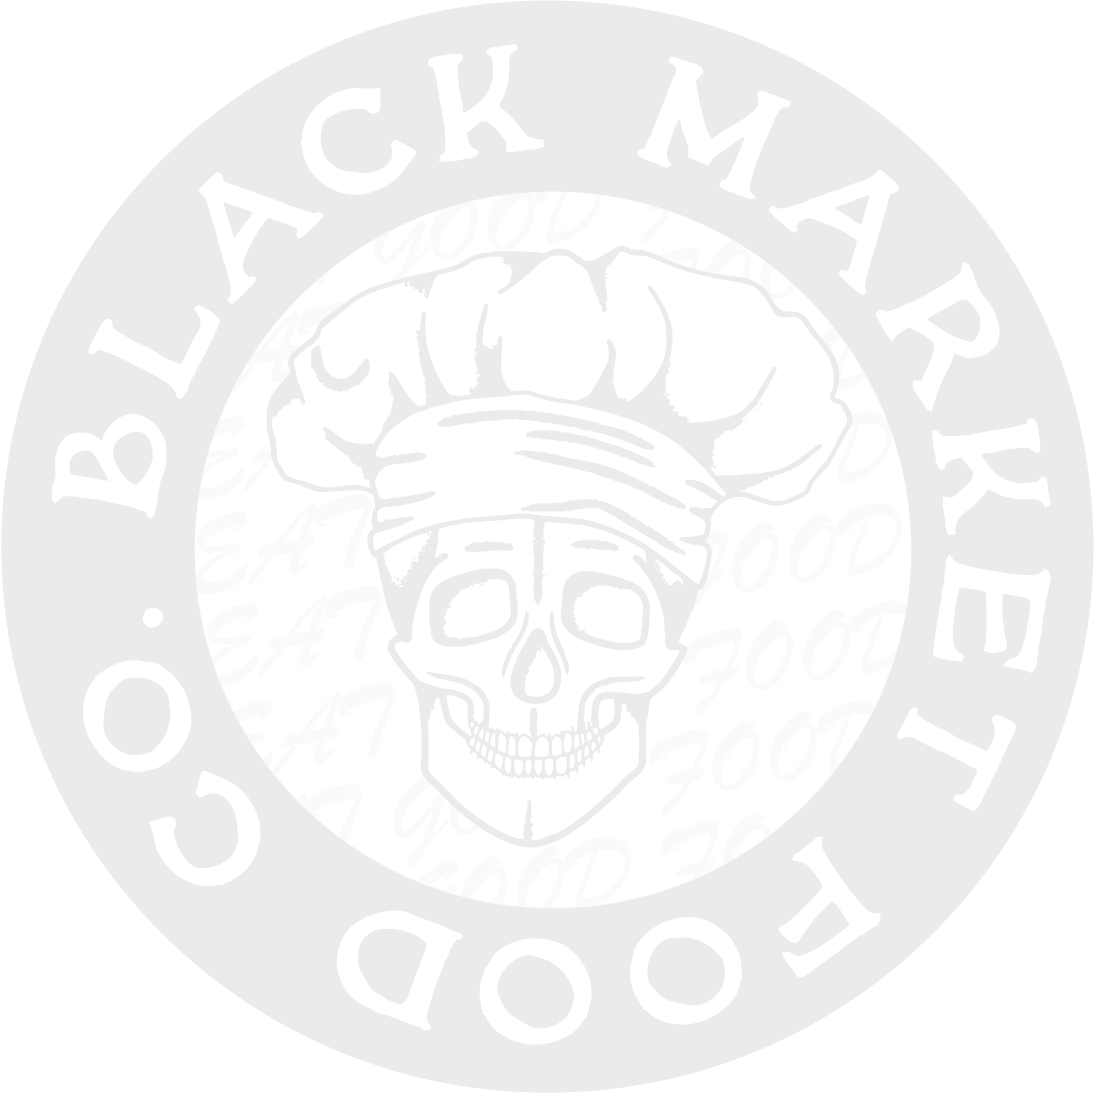 The Black Market Food Co